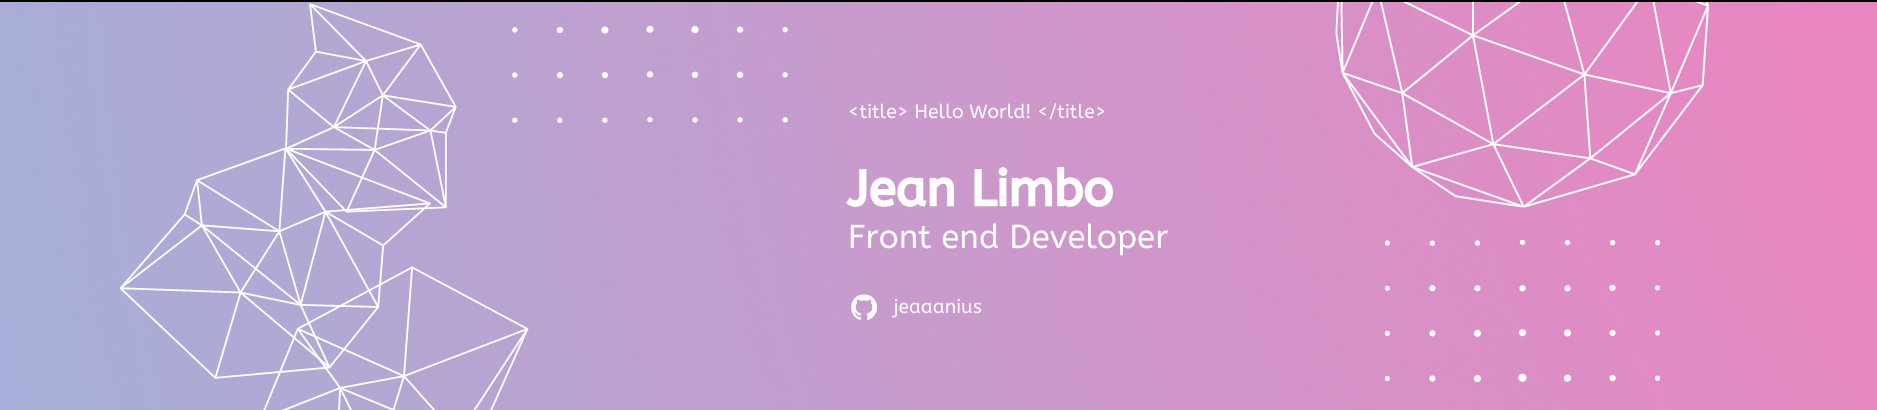 Jean Darren Limbo's profile banner